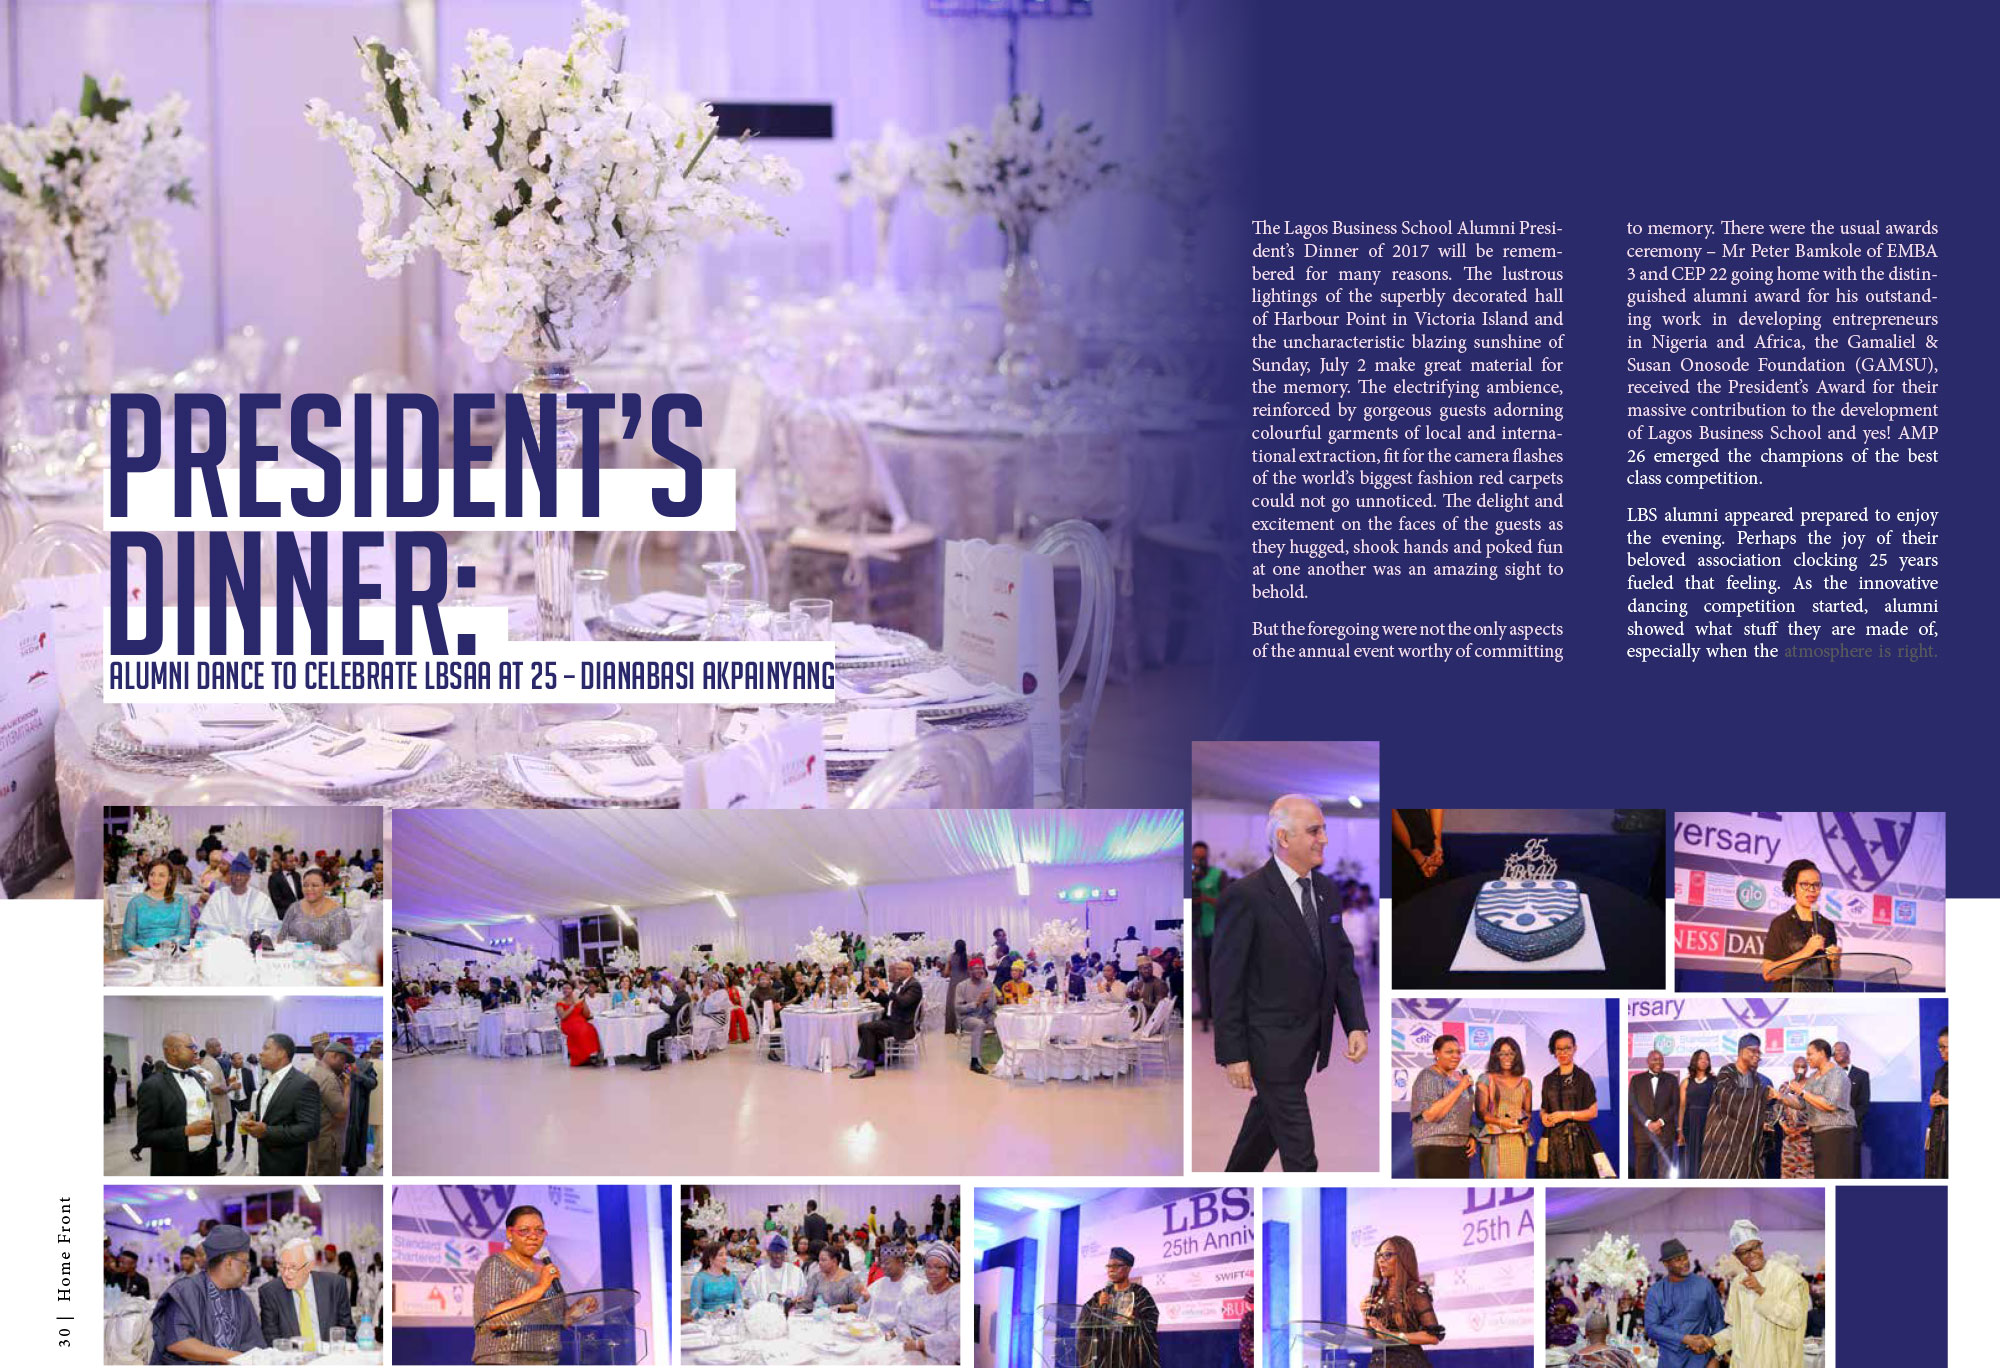 PresidentsDinner Alumni Magazine.jpg